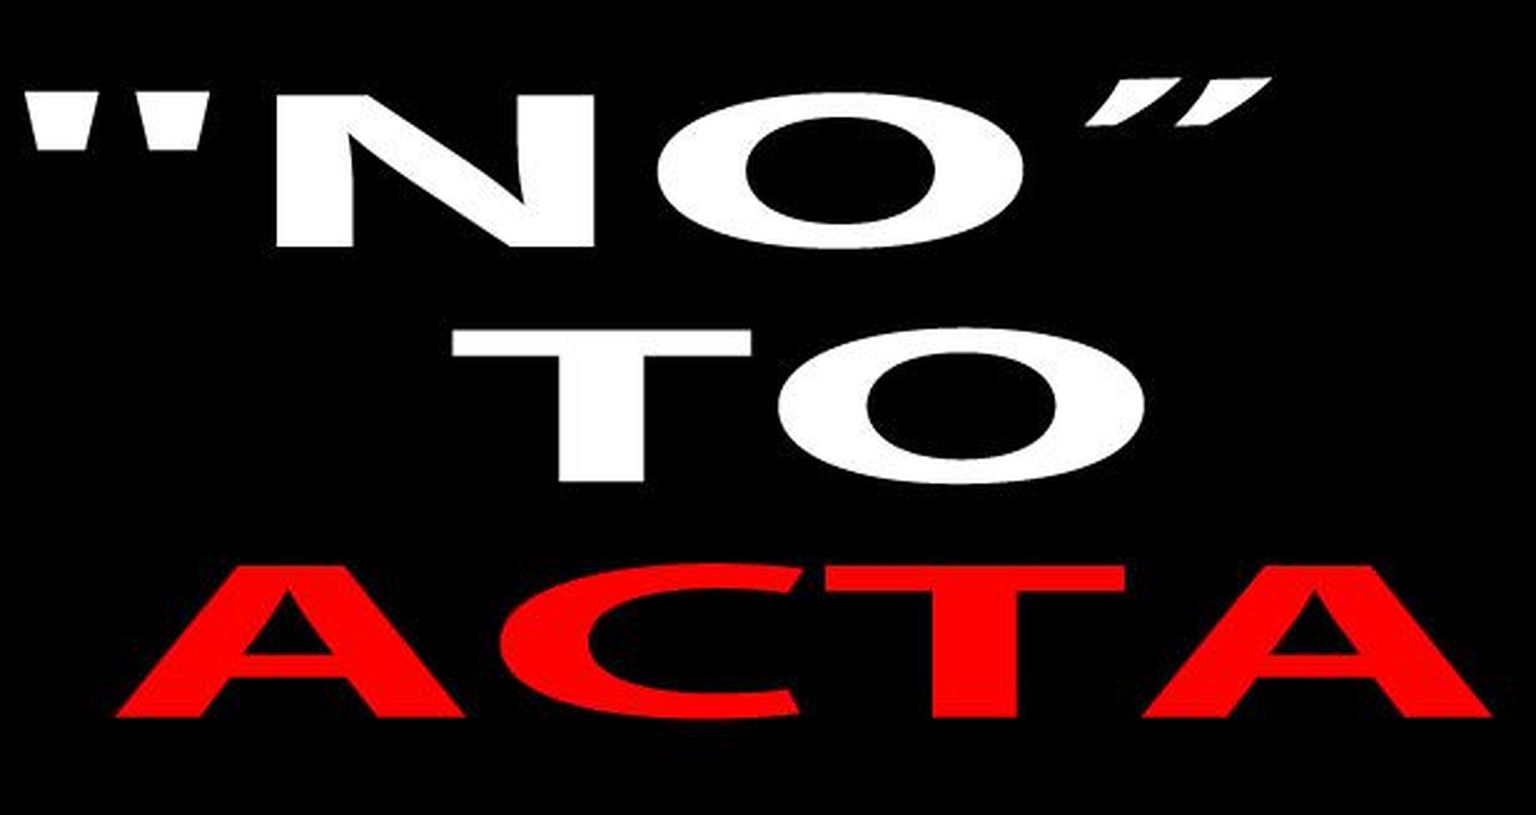 ACTA vastaste plakat.